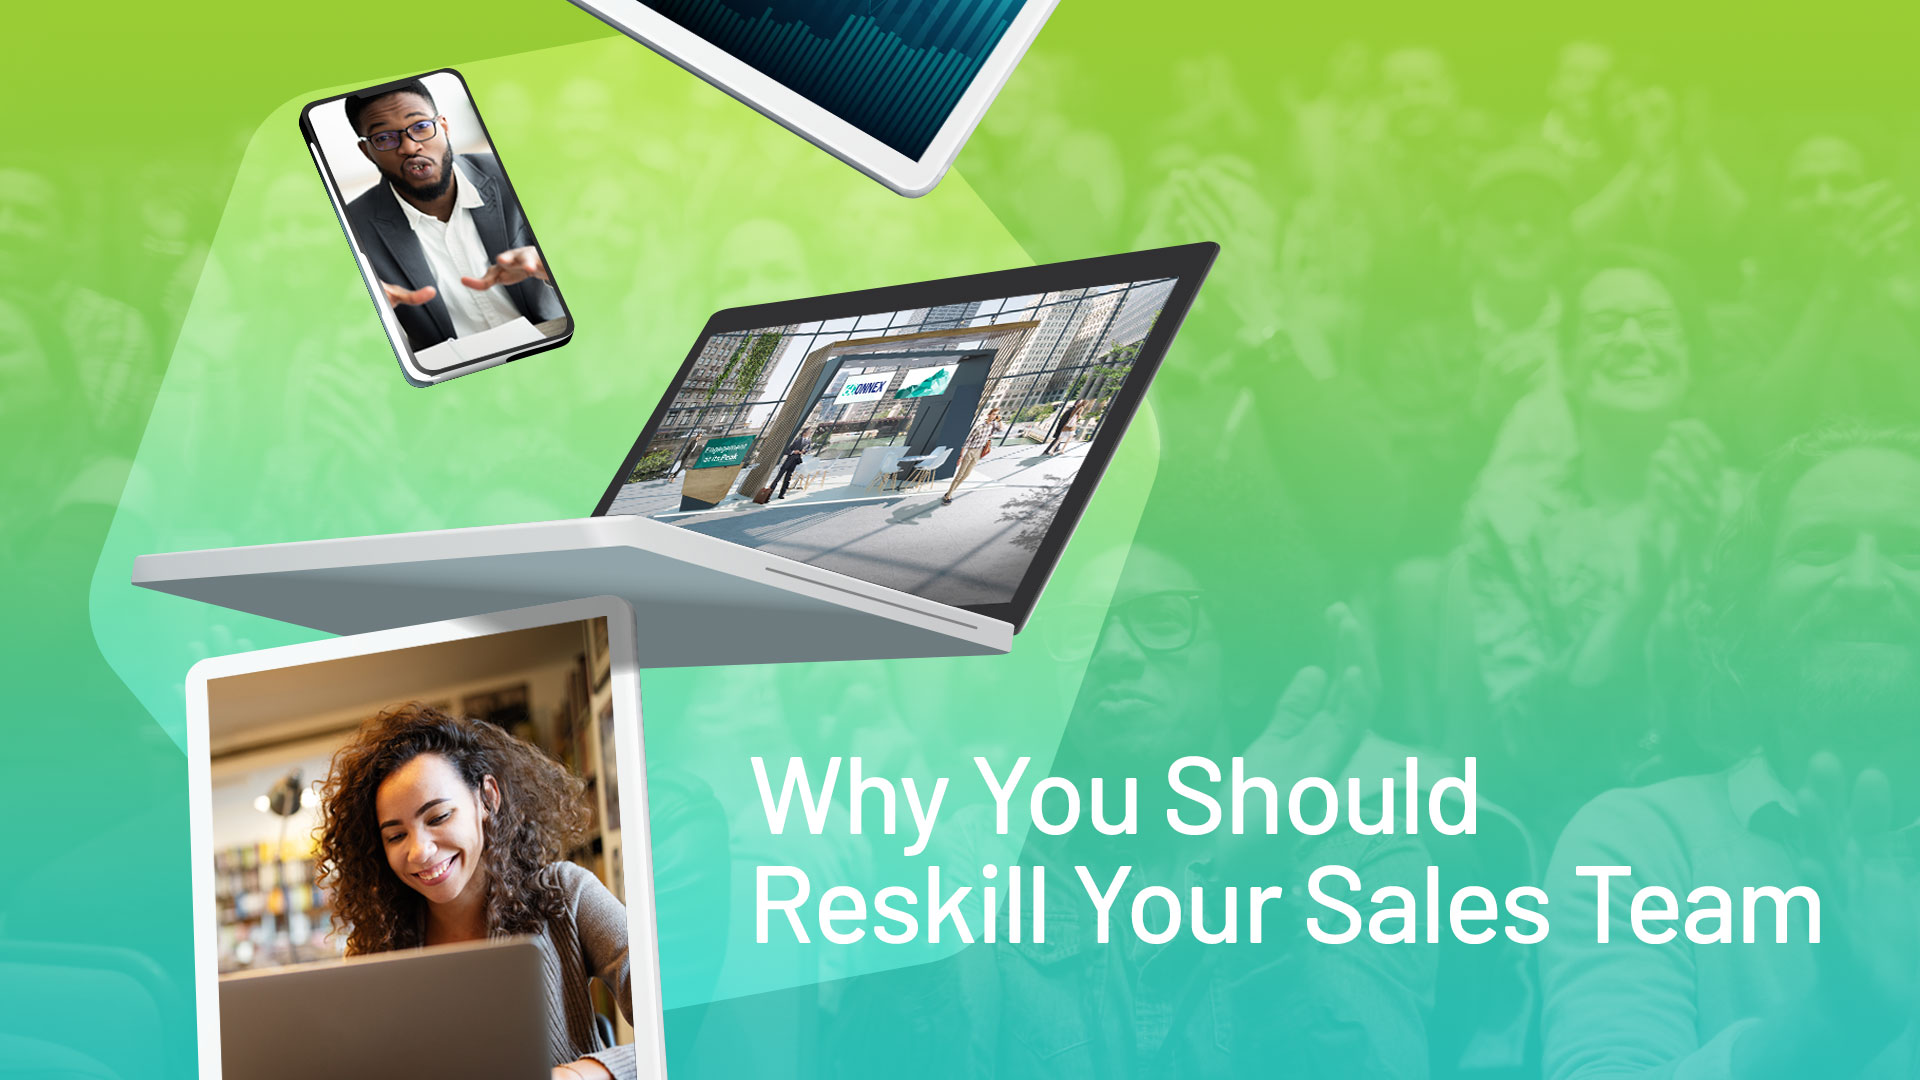 reskill and upskill your sales team